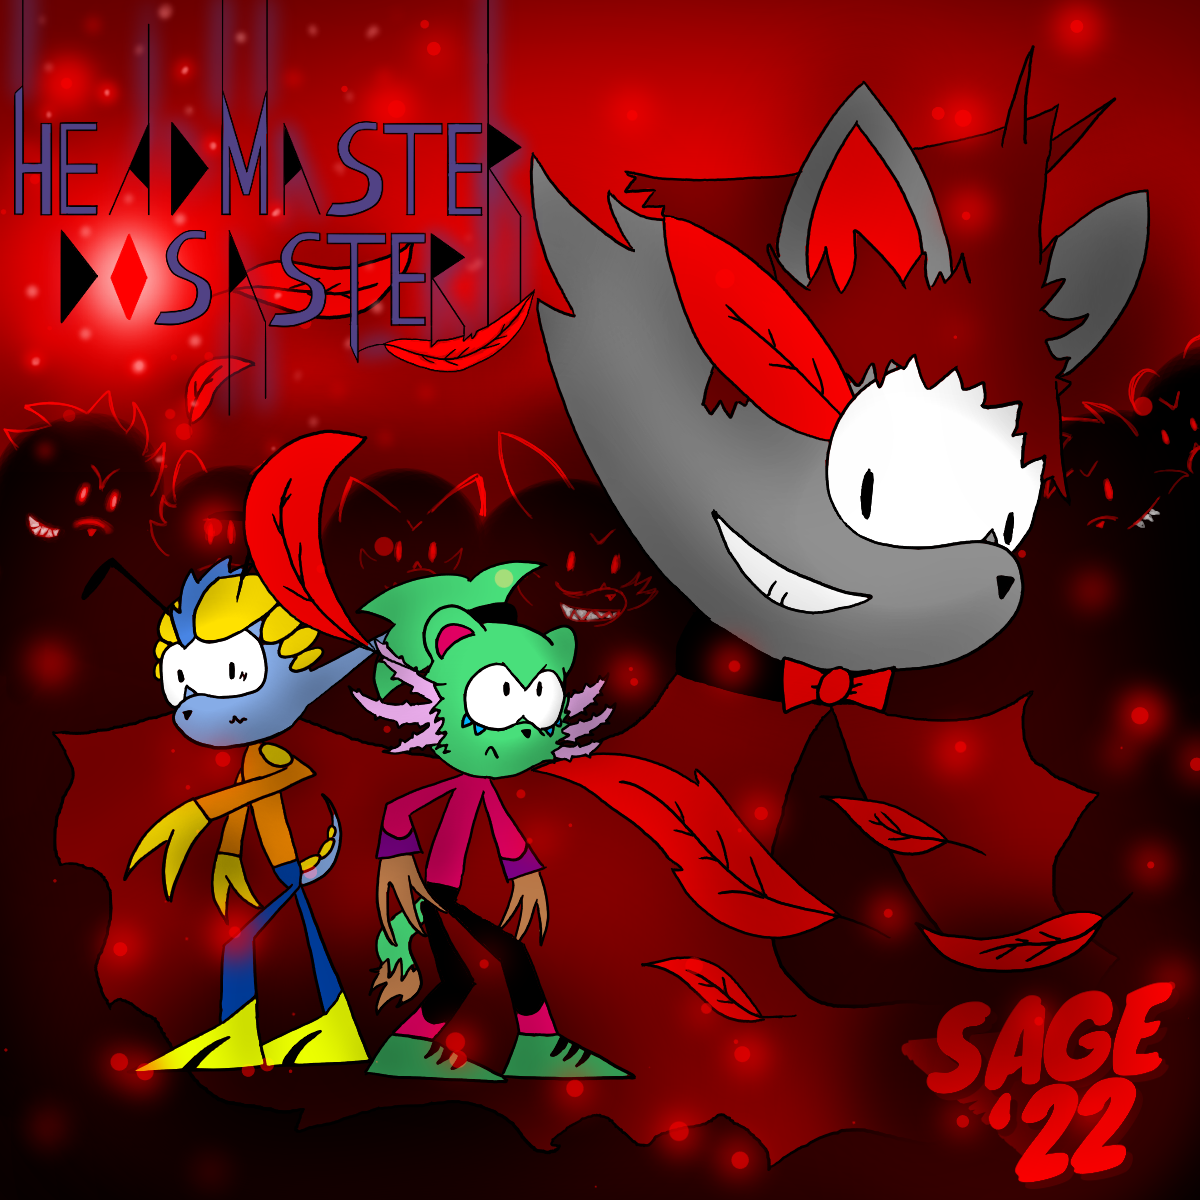 Darkspine Sonic [Sonic Forces] [Works In Progress]